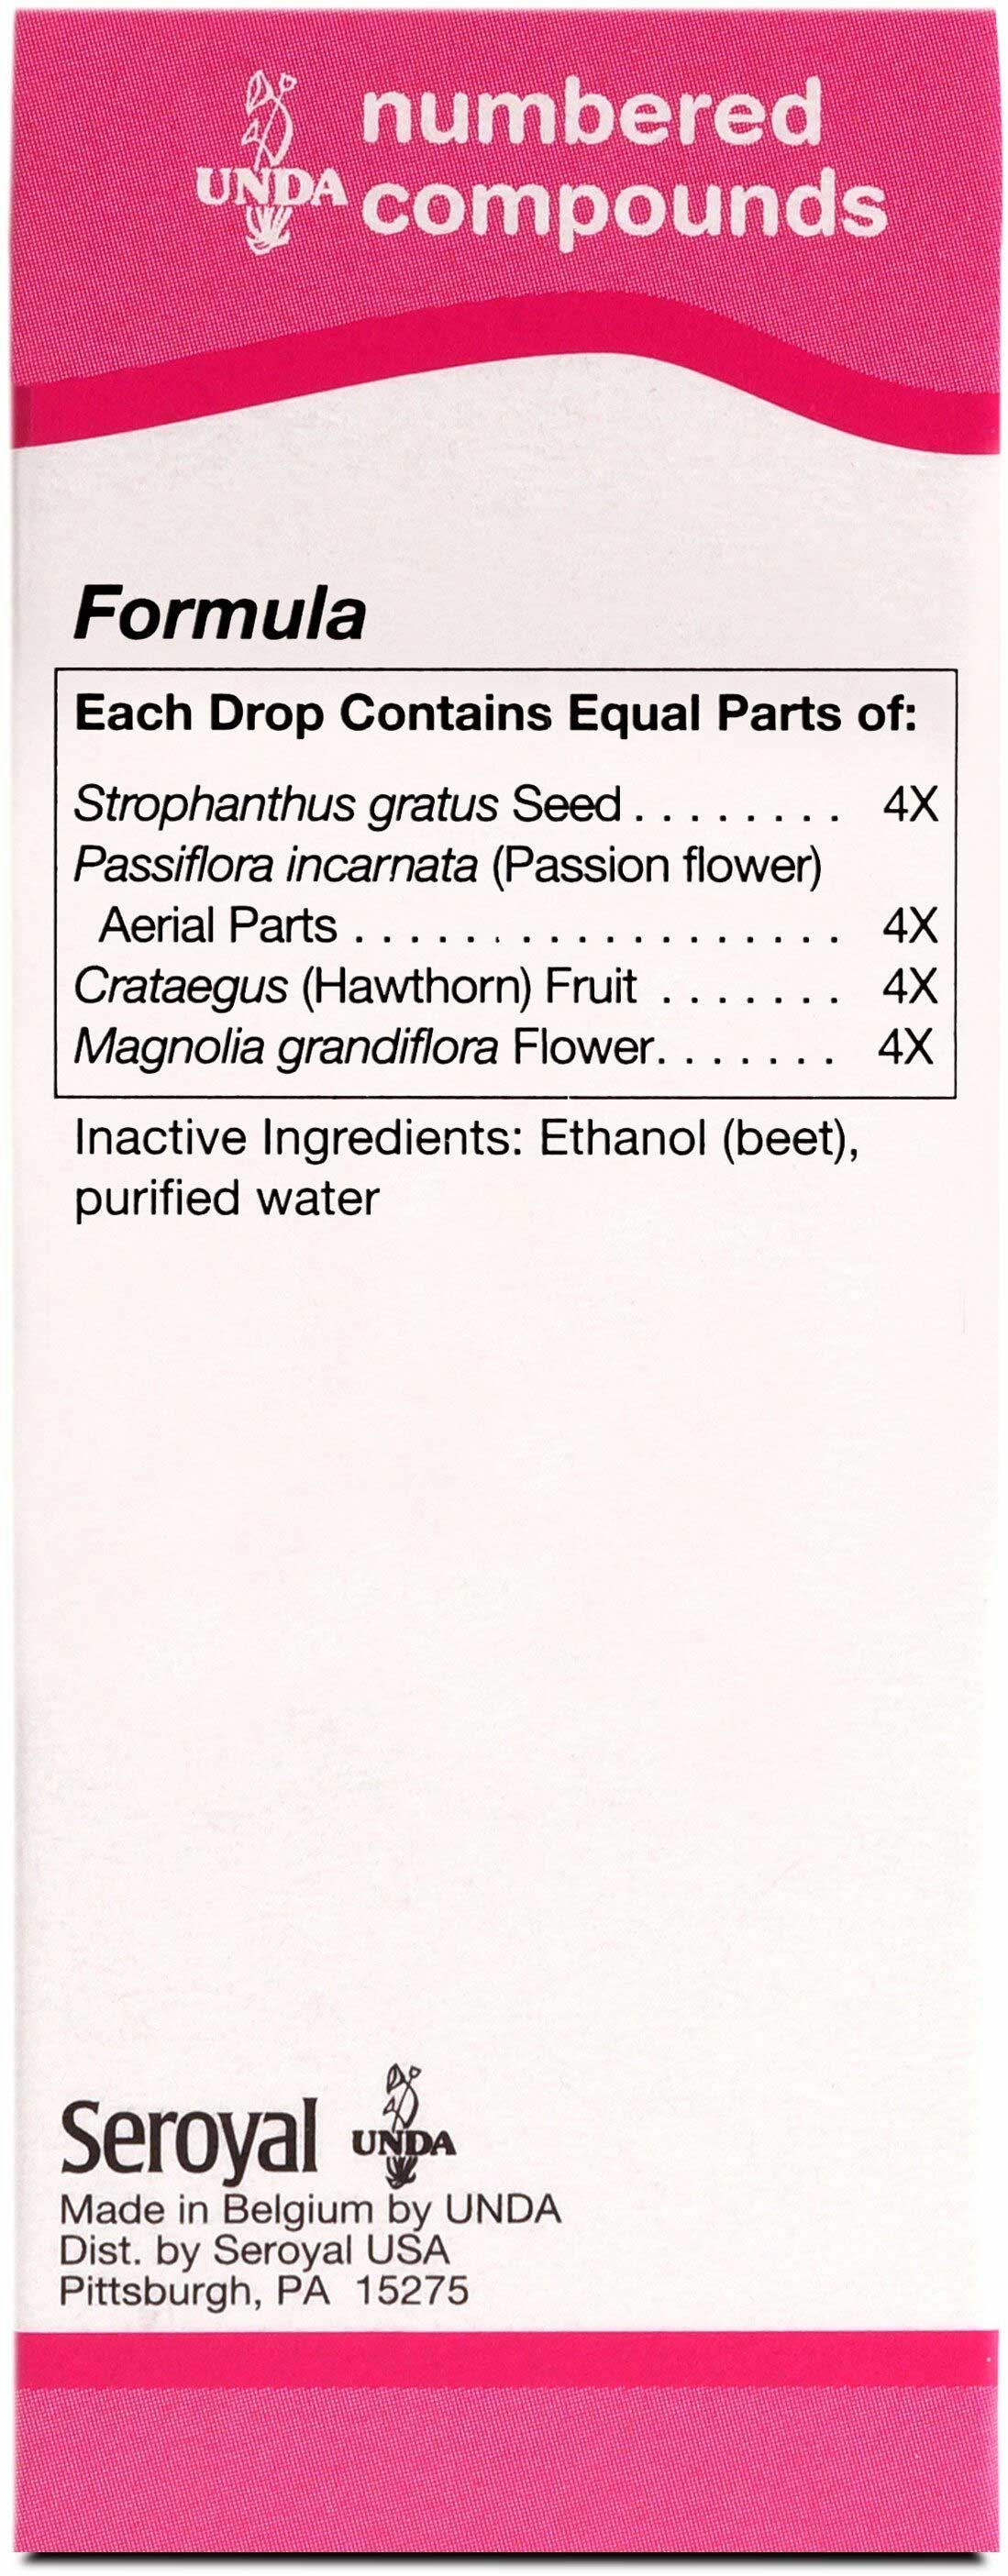 UNDA #248 Ingredients